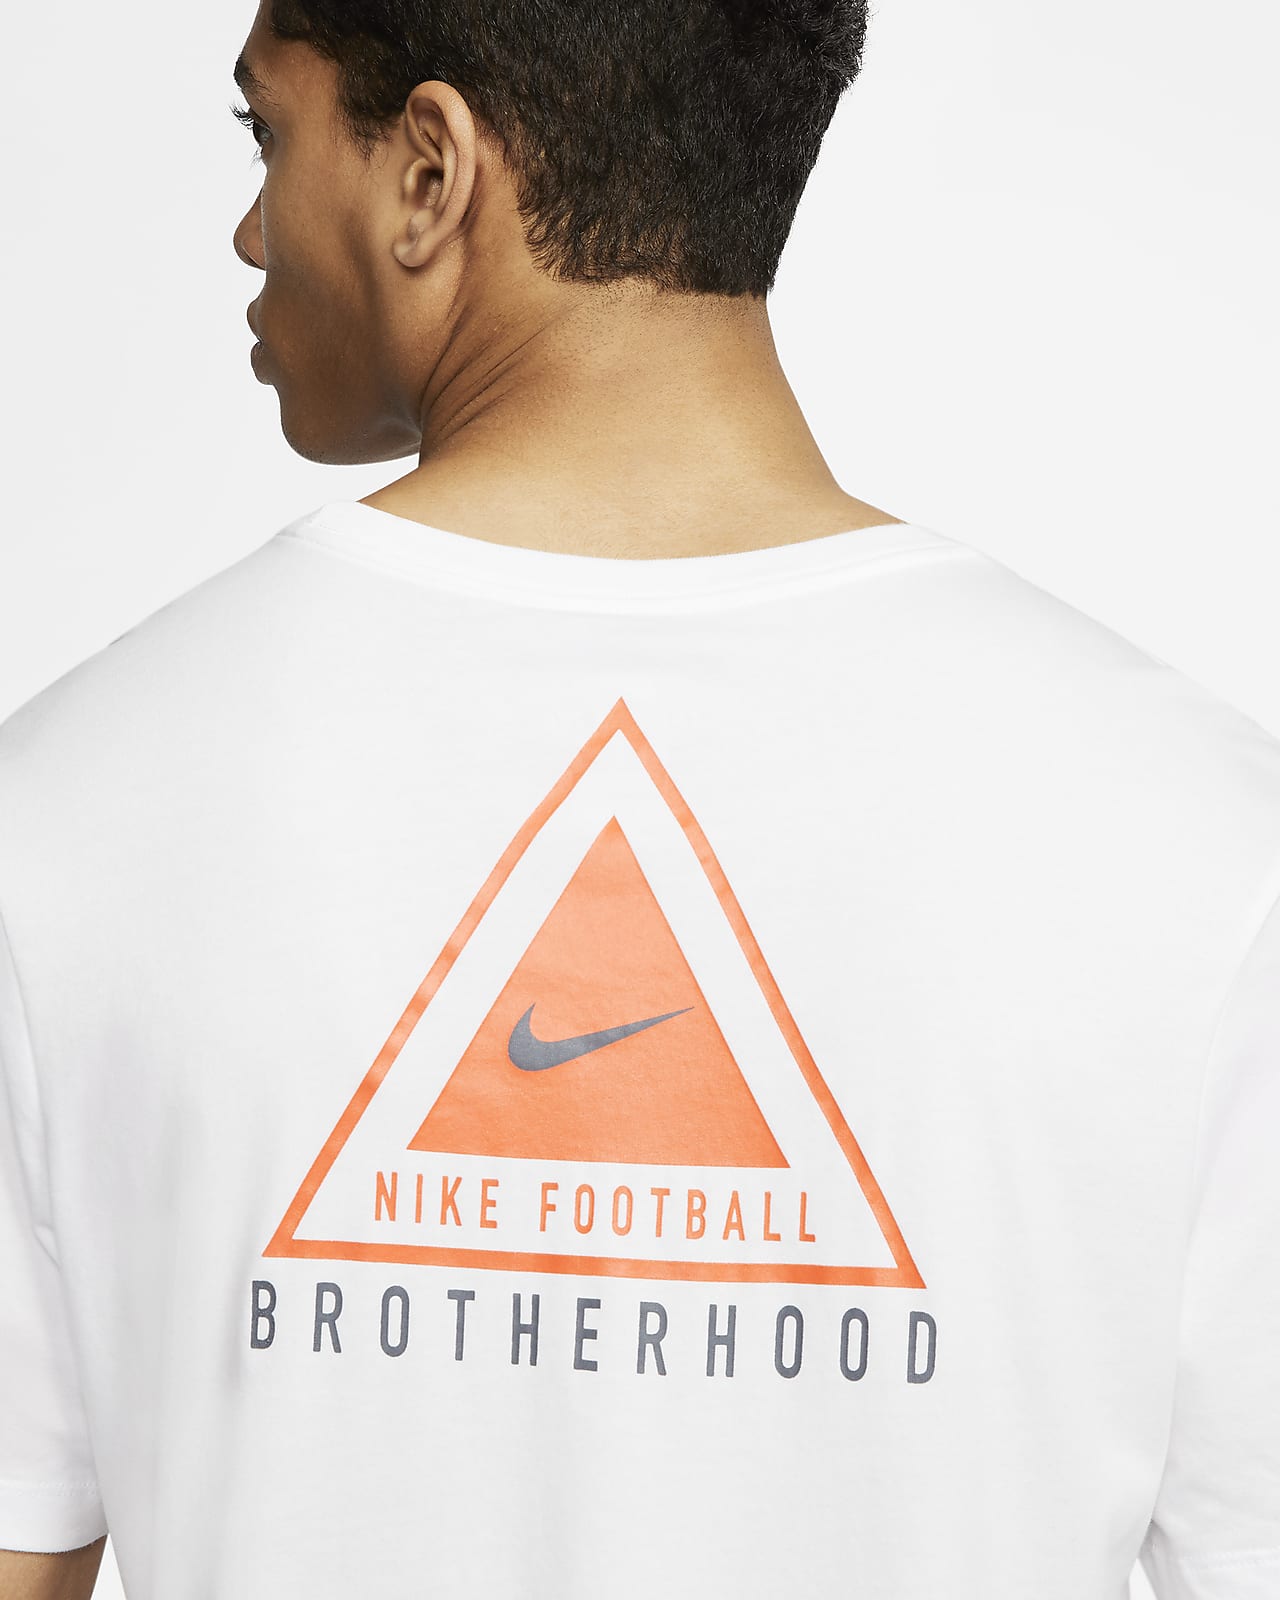 nike football brotherhood shirt